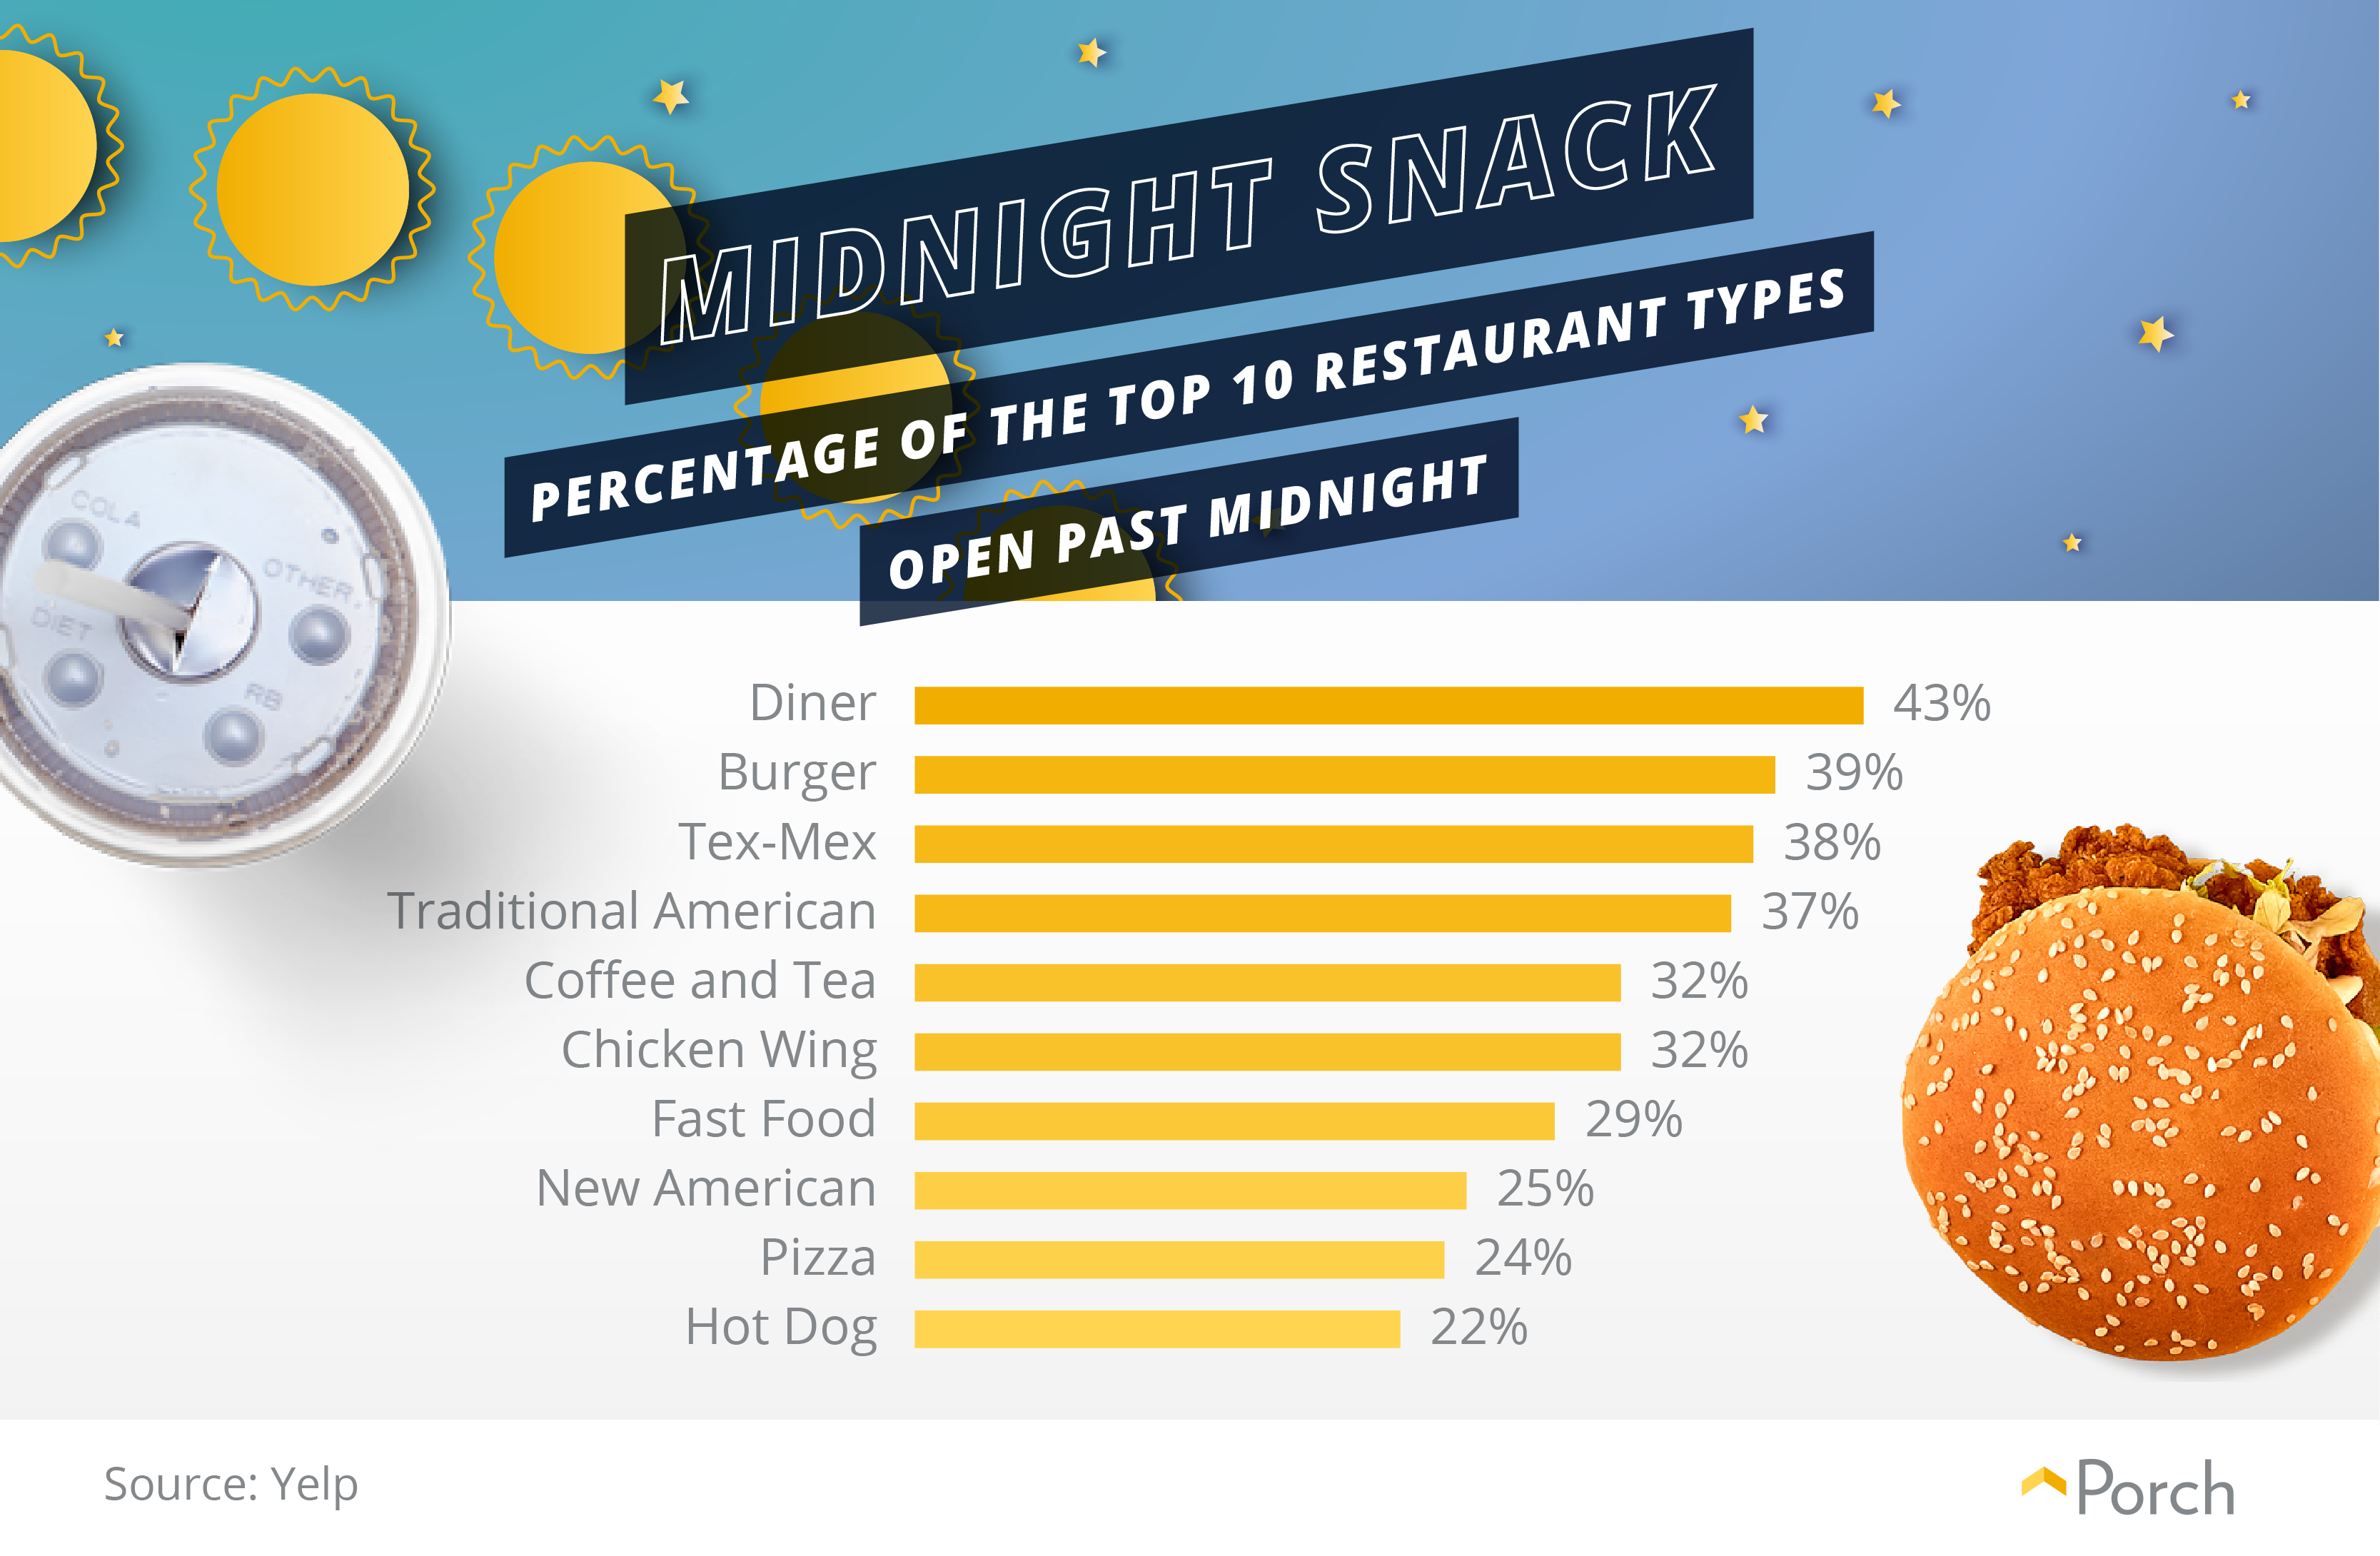 Percentage of restaurant types open past midnight